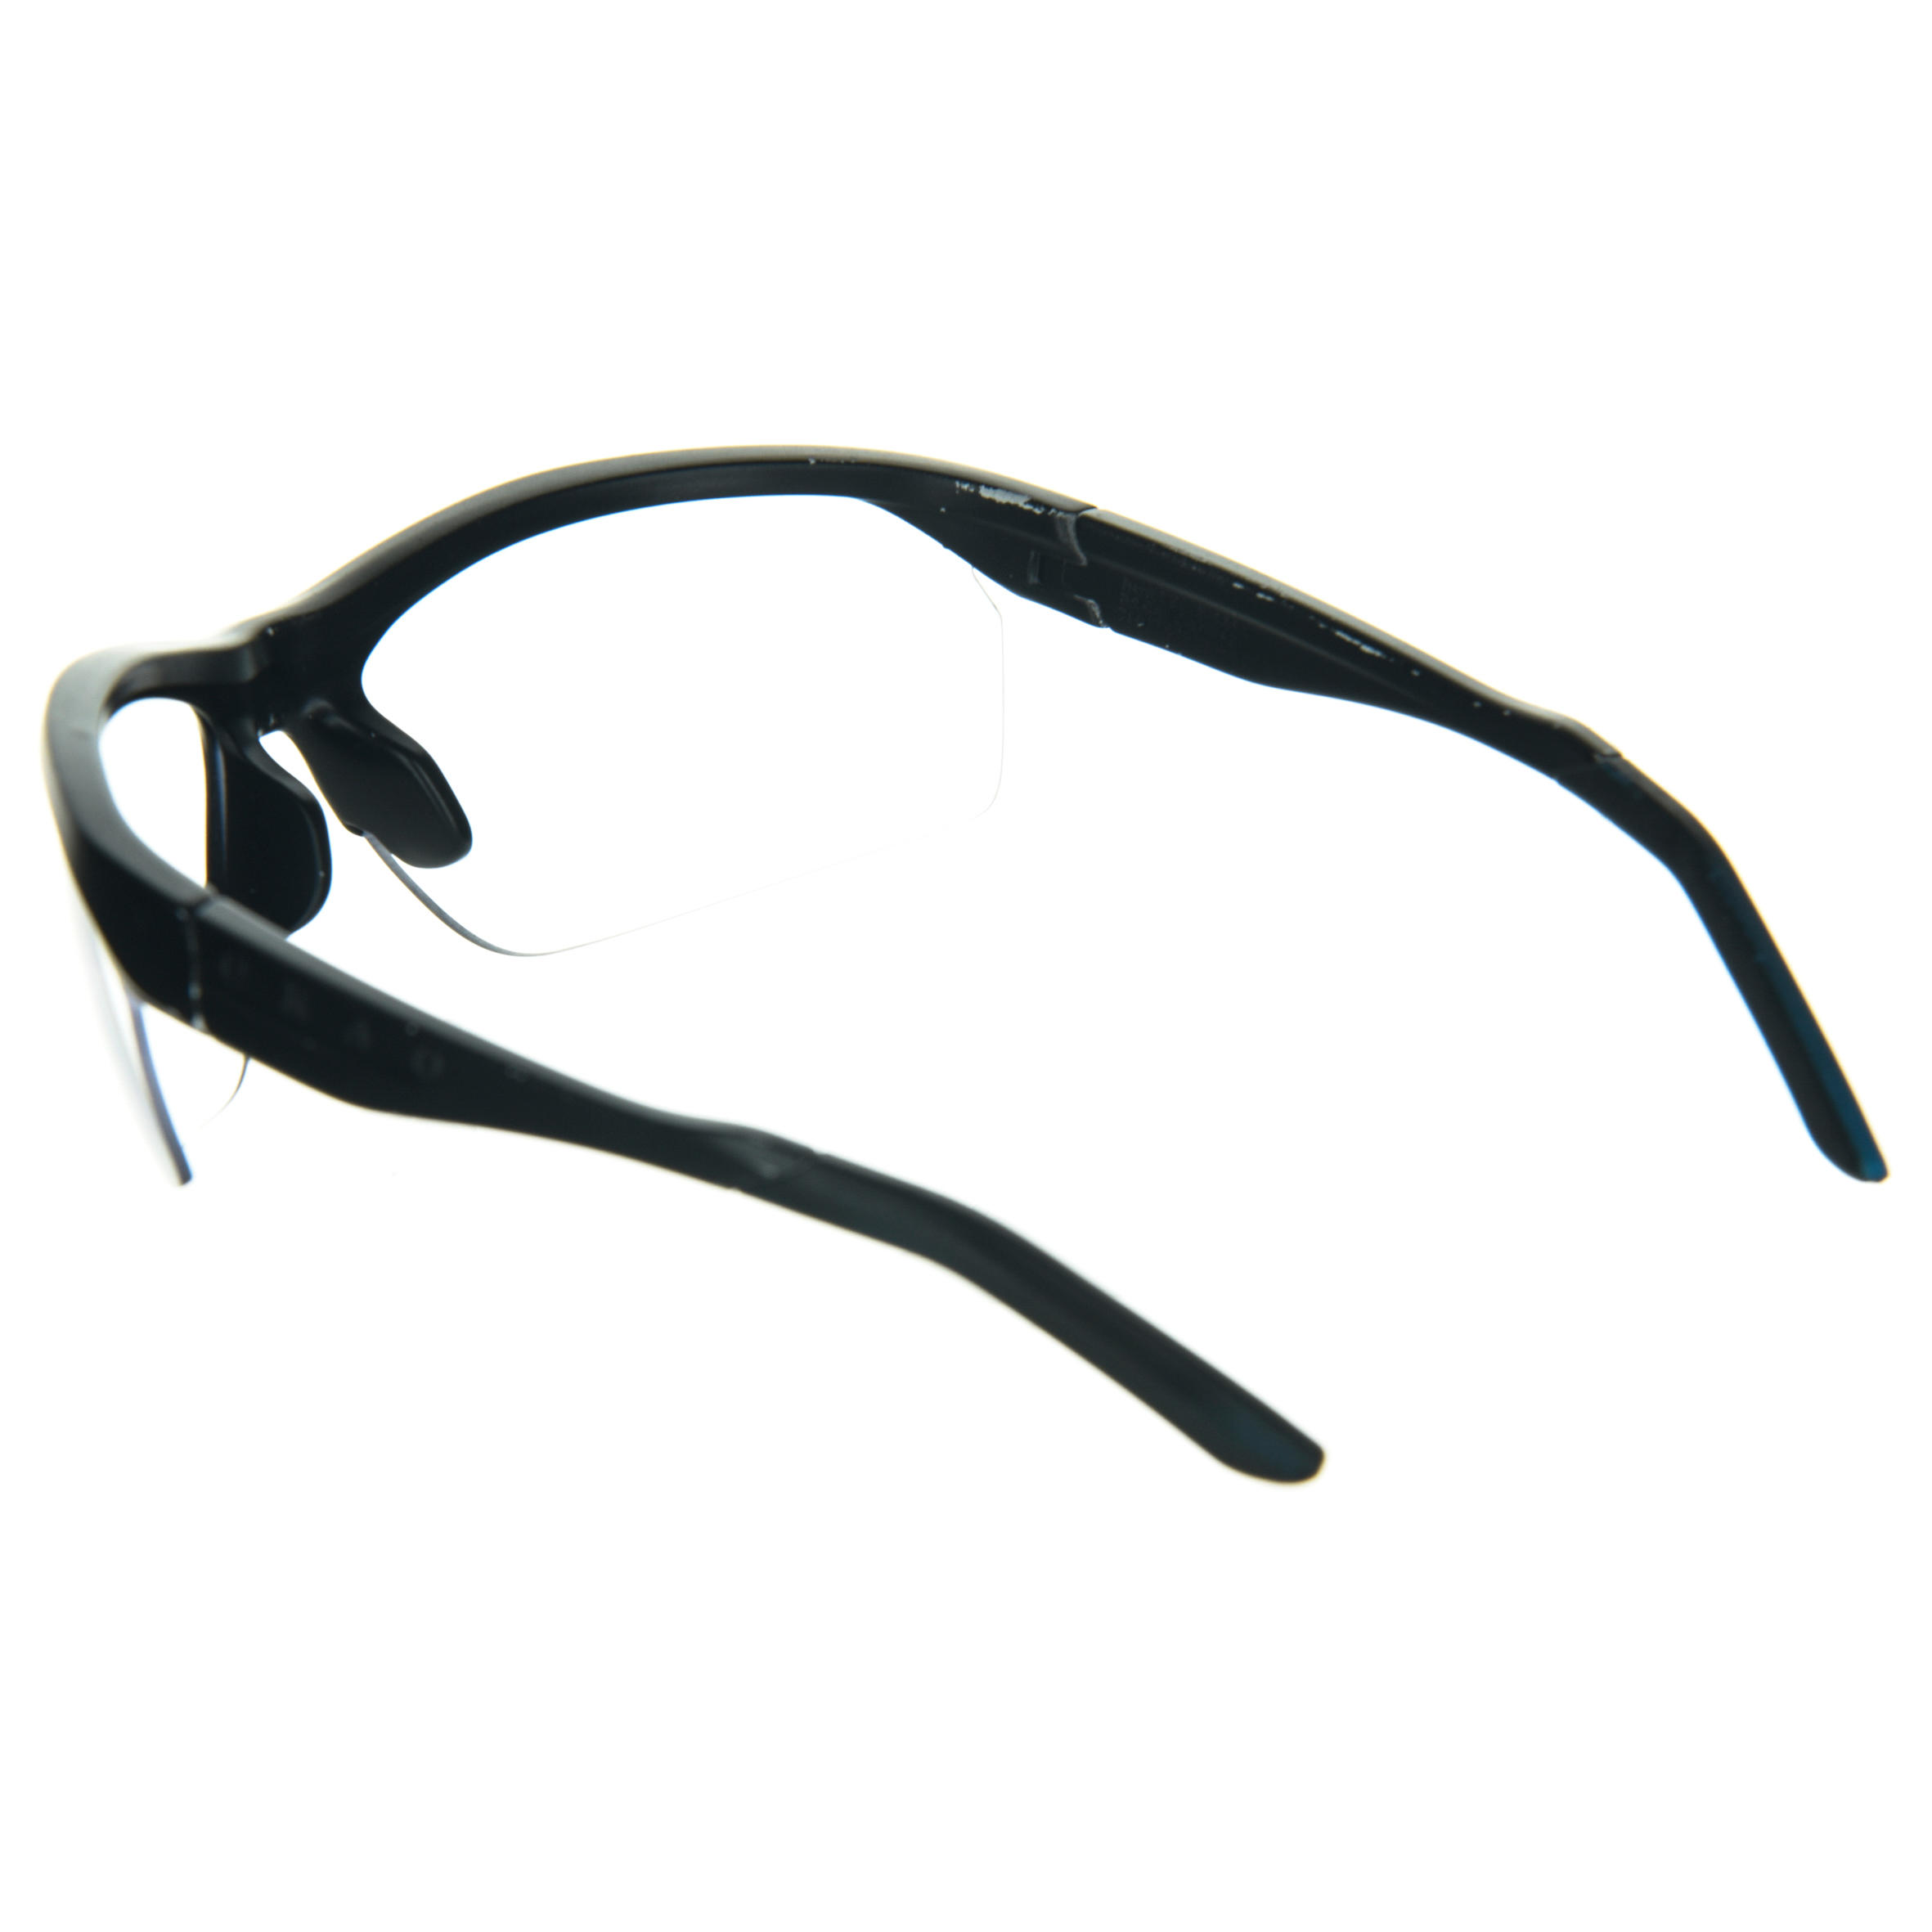 Squash Wide Face Glasses SPG 100 - Size L 5/6